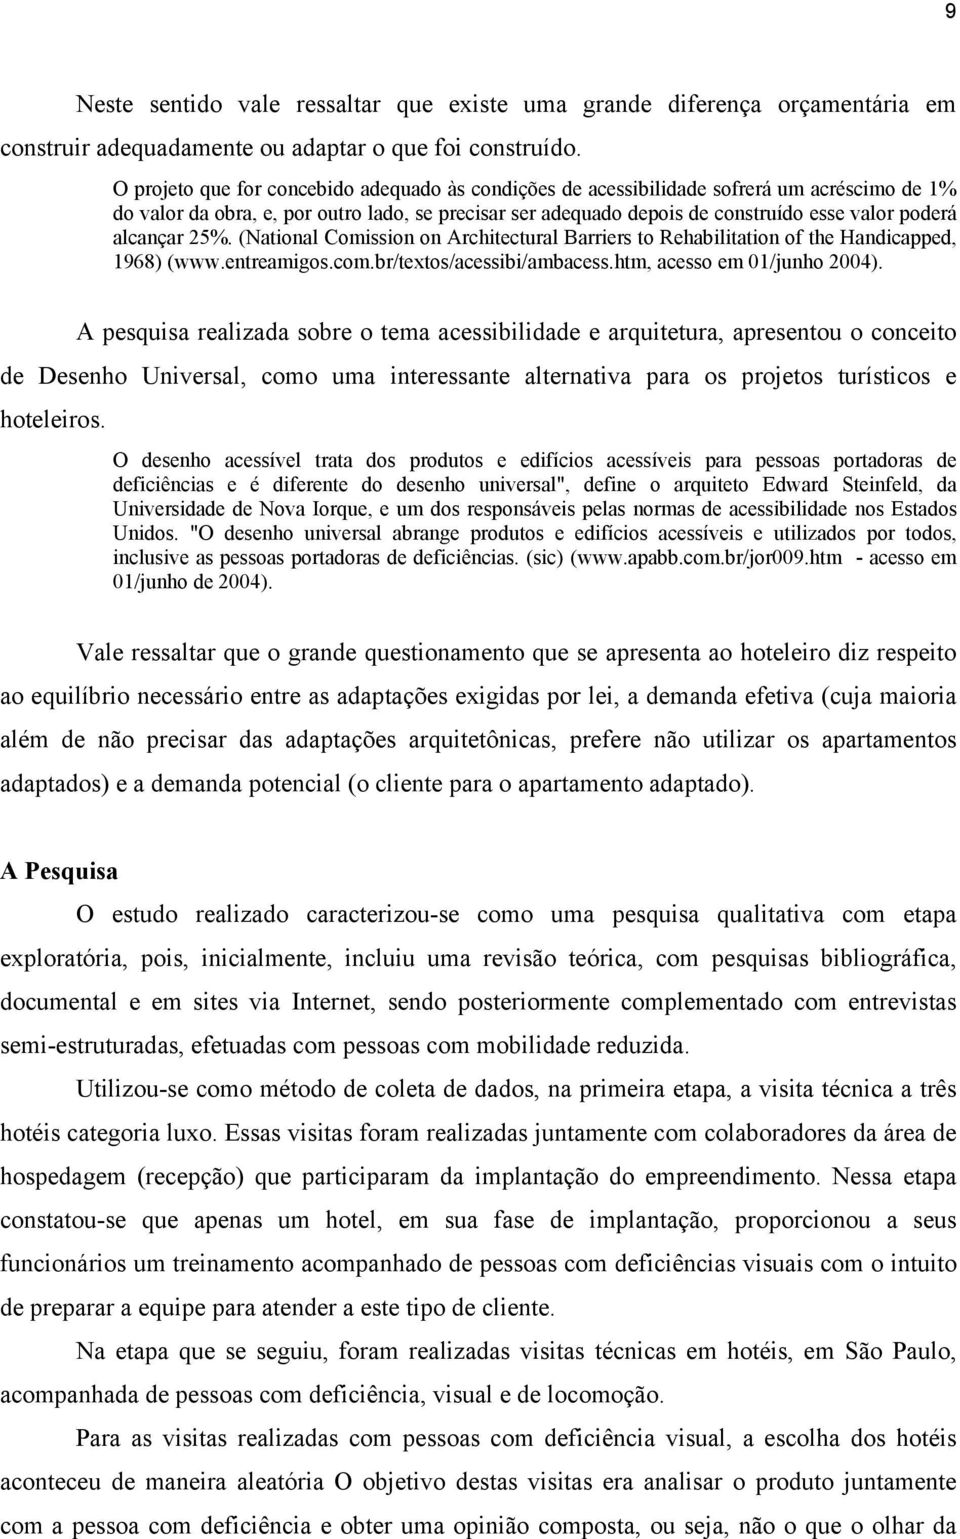 alcançar 25%. (National Comission on Architectural Barriers to Rehabilitation of the Handicapped, 1968) (www.entreamigos.com.br/textos/acessibi/ambacess.htm, acesso em 01/junho 2004).